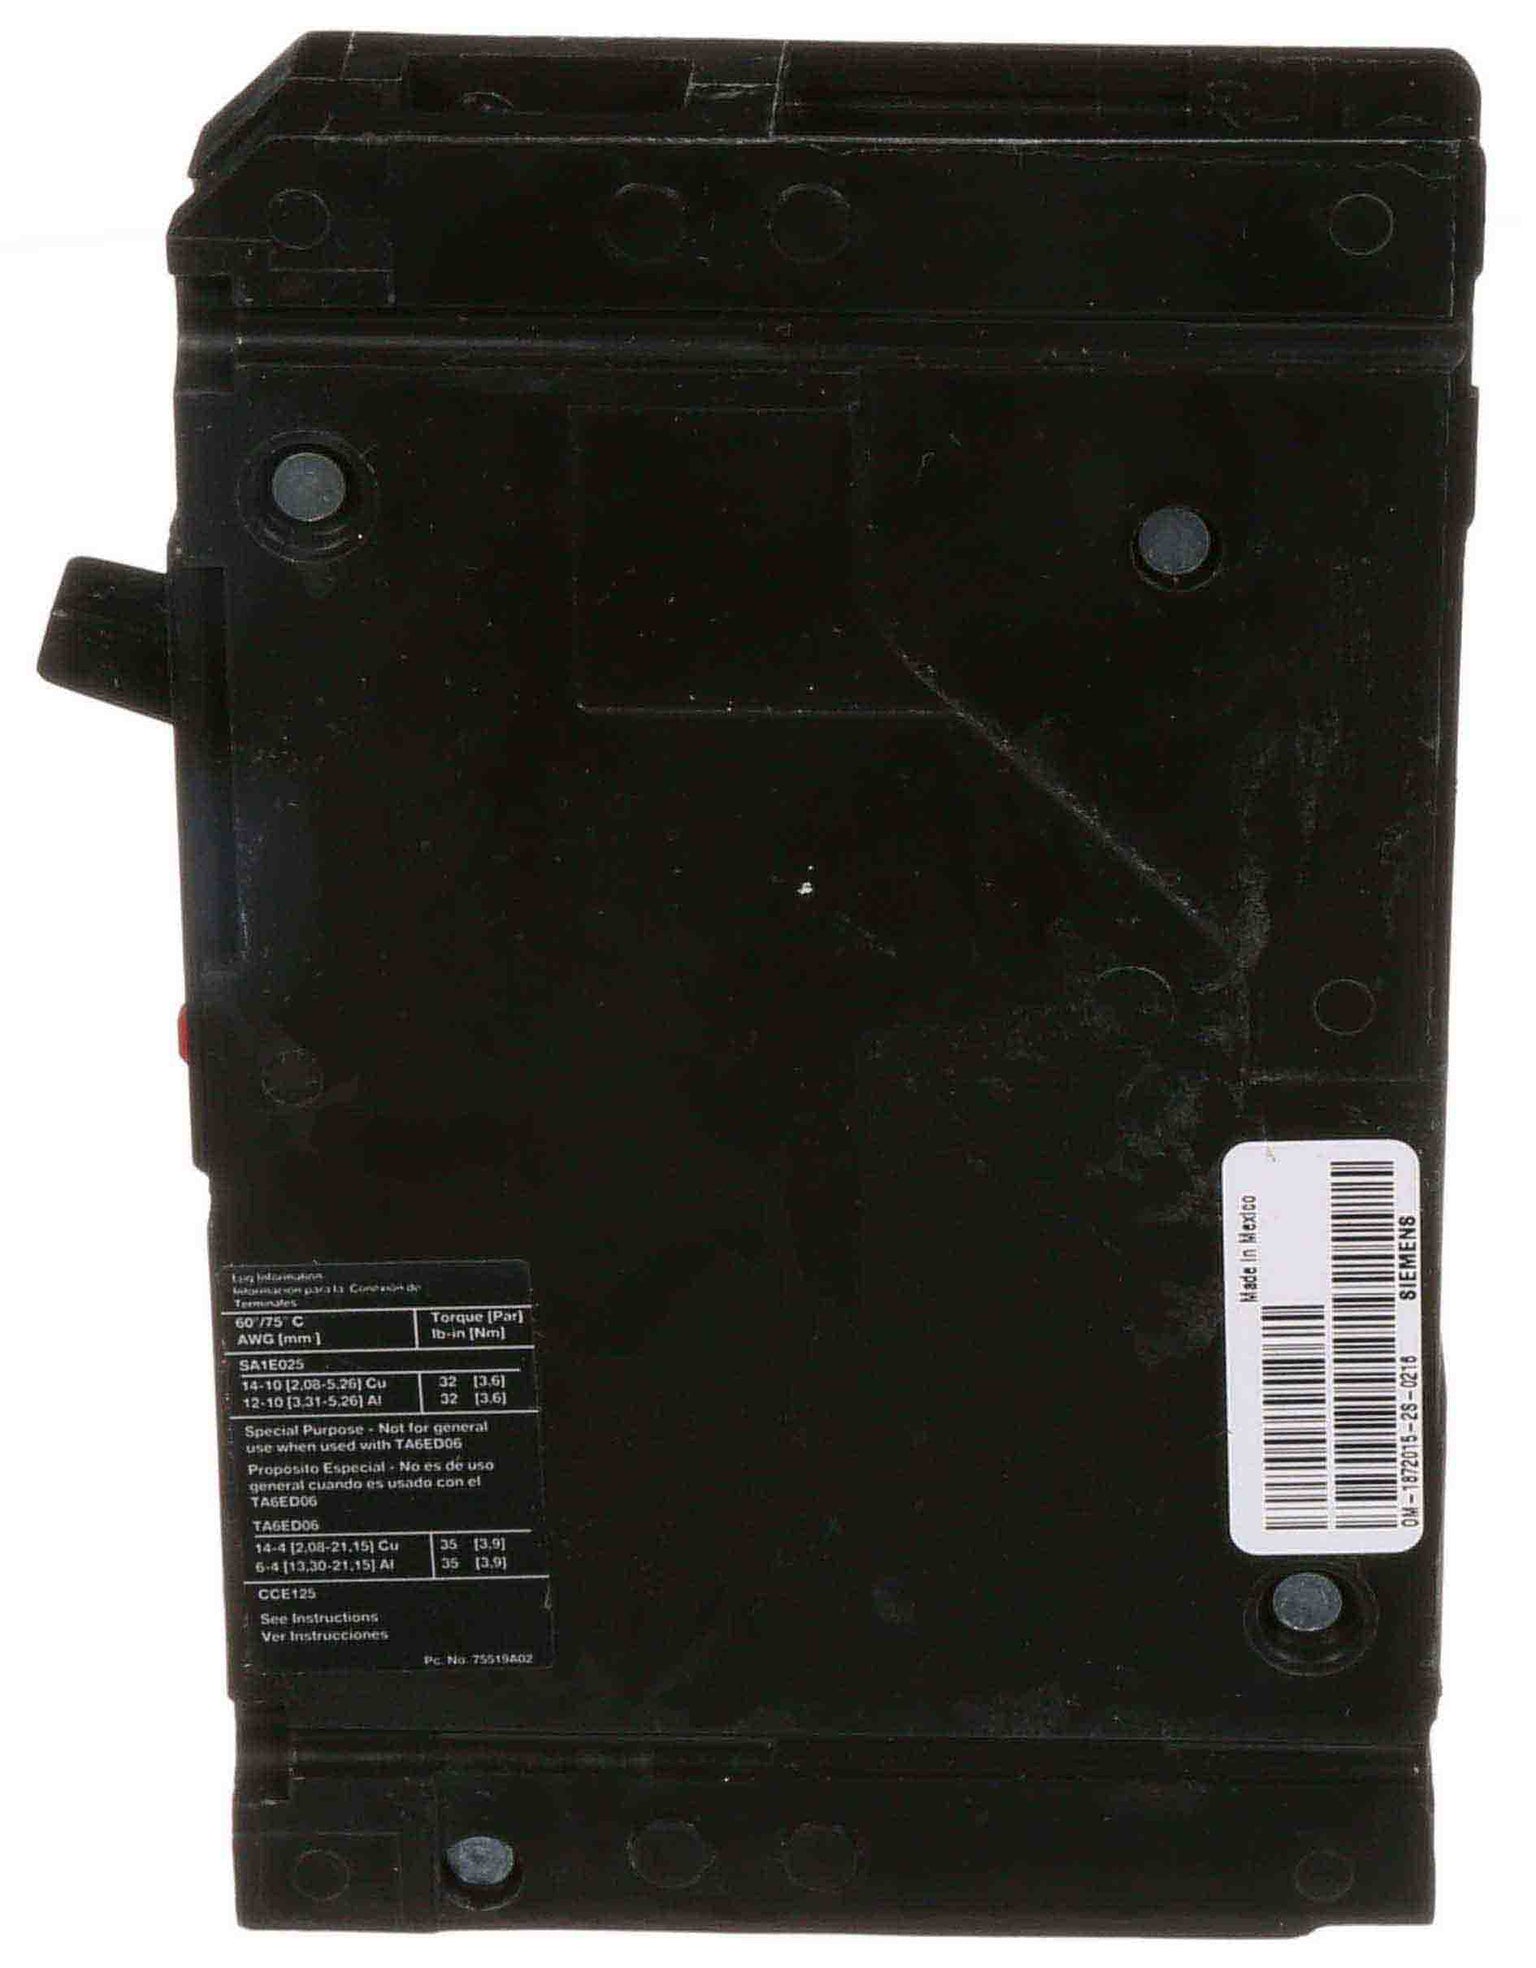 ED21B025 - Siemens - Molded Case Circuit Breaker